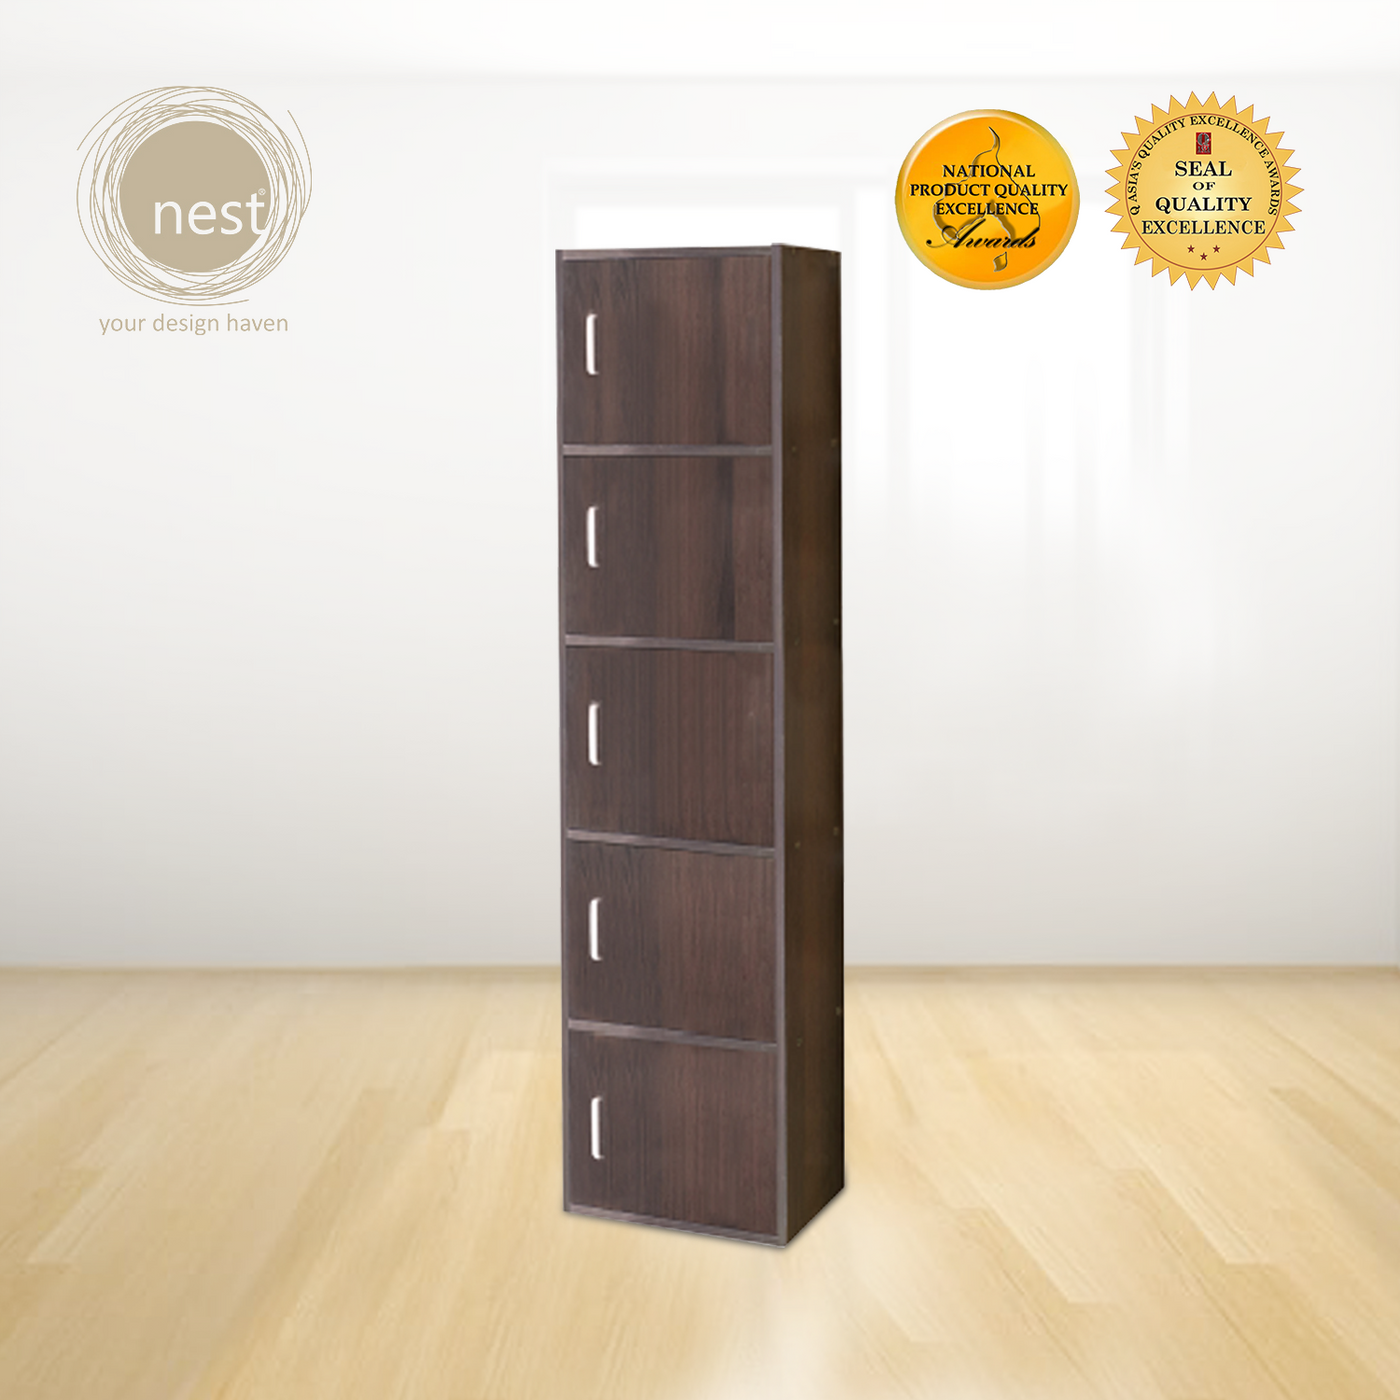 NEST DESIGN LAB Premium 5 Layer Cabinet w/ Door Multi-Purpose Modern Italian Design Amazing Gift Idea For Any Occasion! (Wenge)